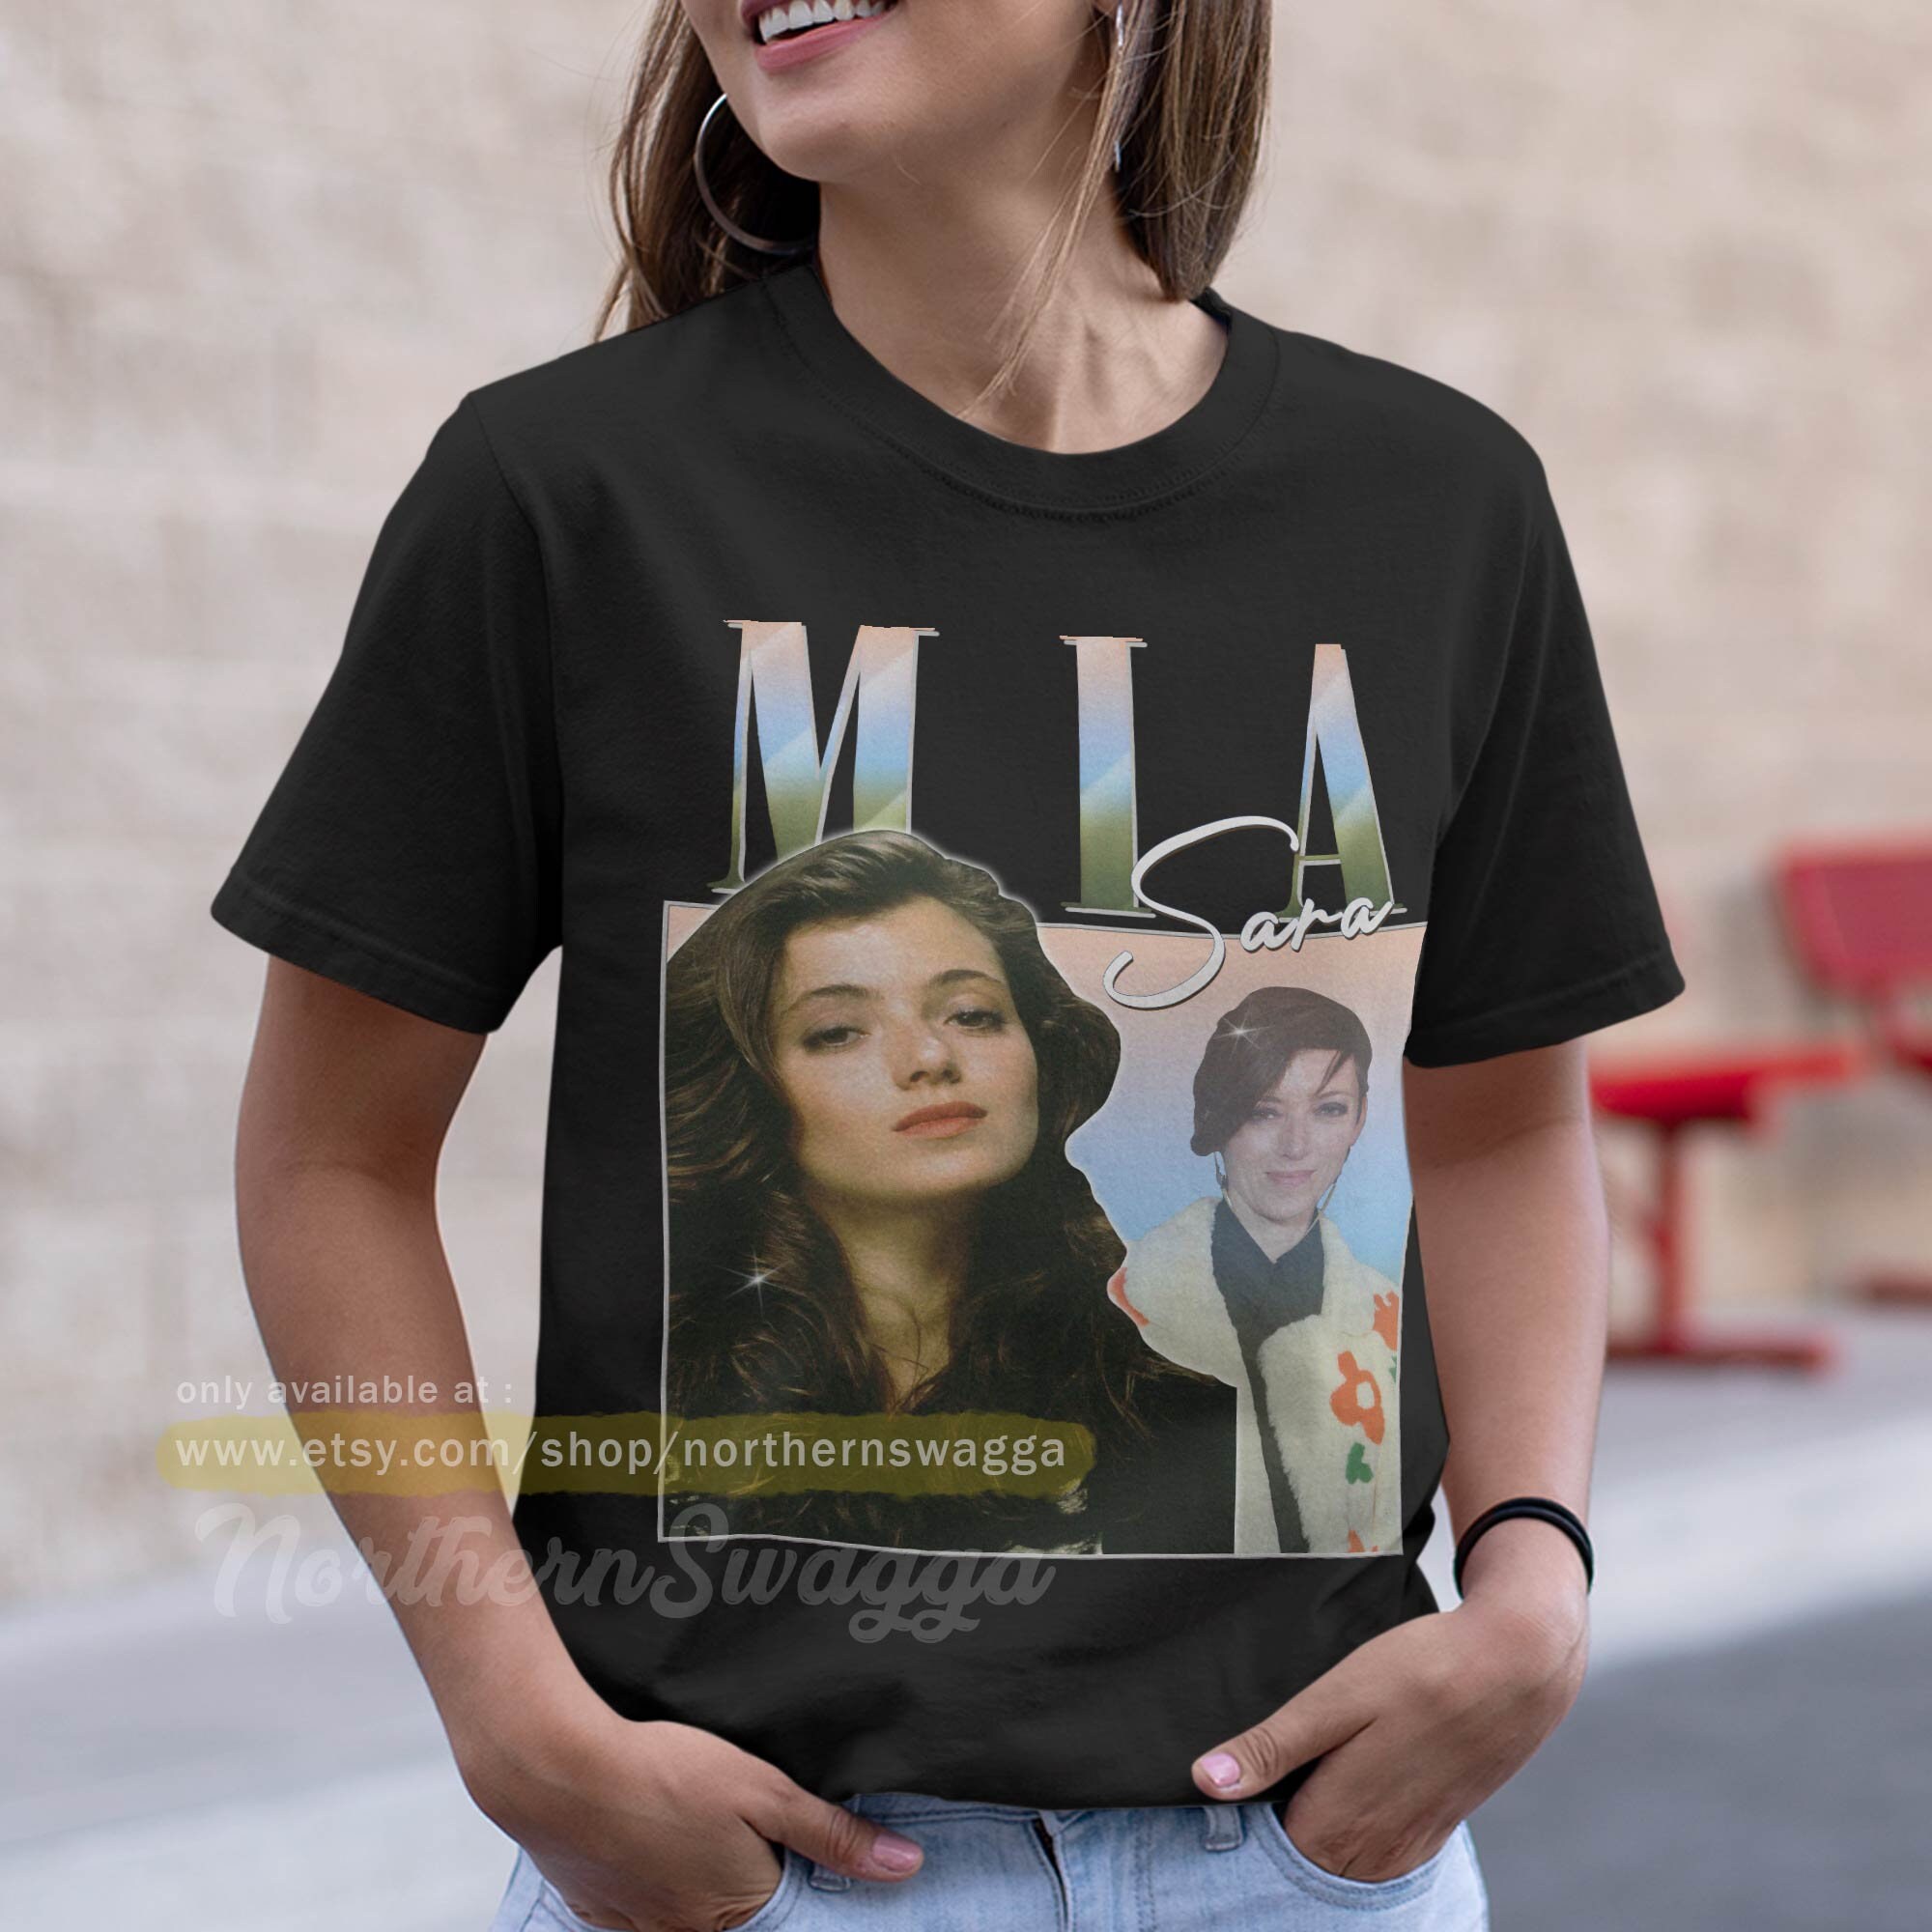 Mia sara shirt design retro style cool fan art t-shirt 90s poster 267 tee